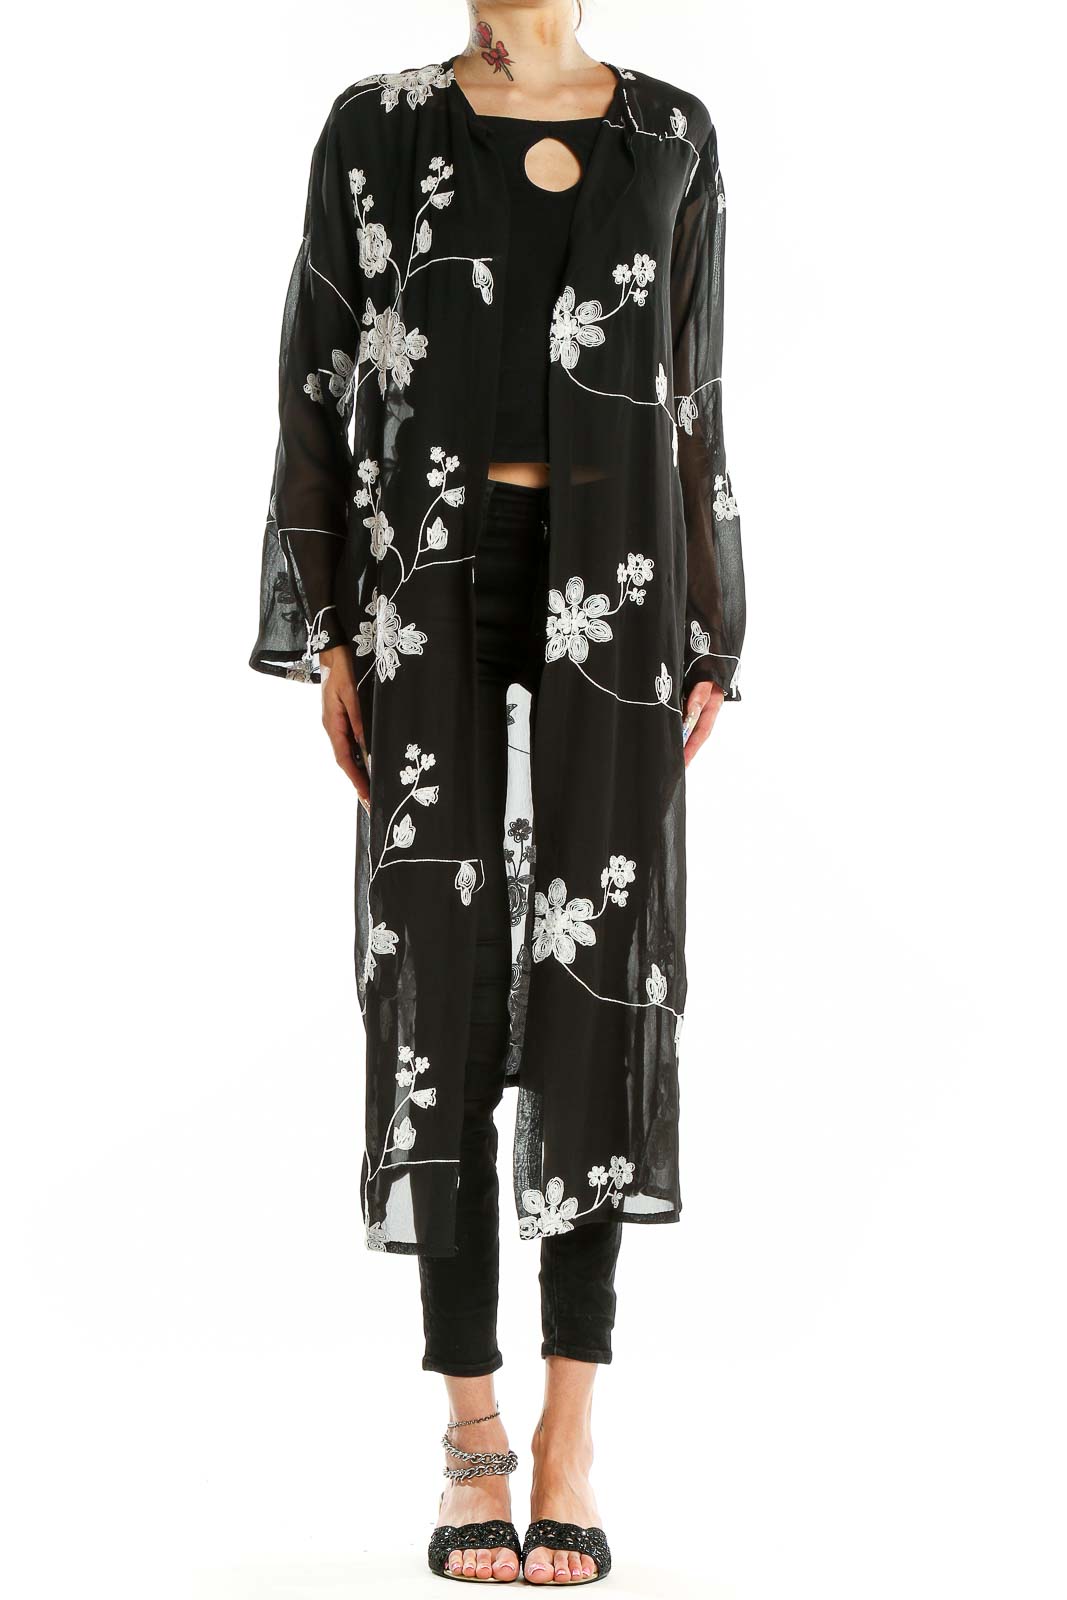 Black Floral Embroidered Long Sheer Cardigan Front